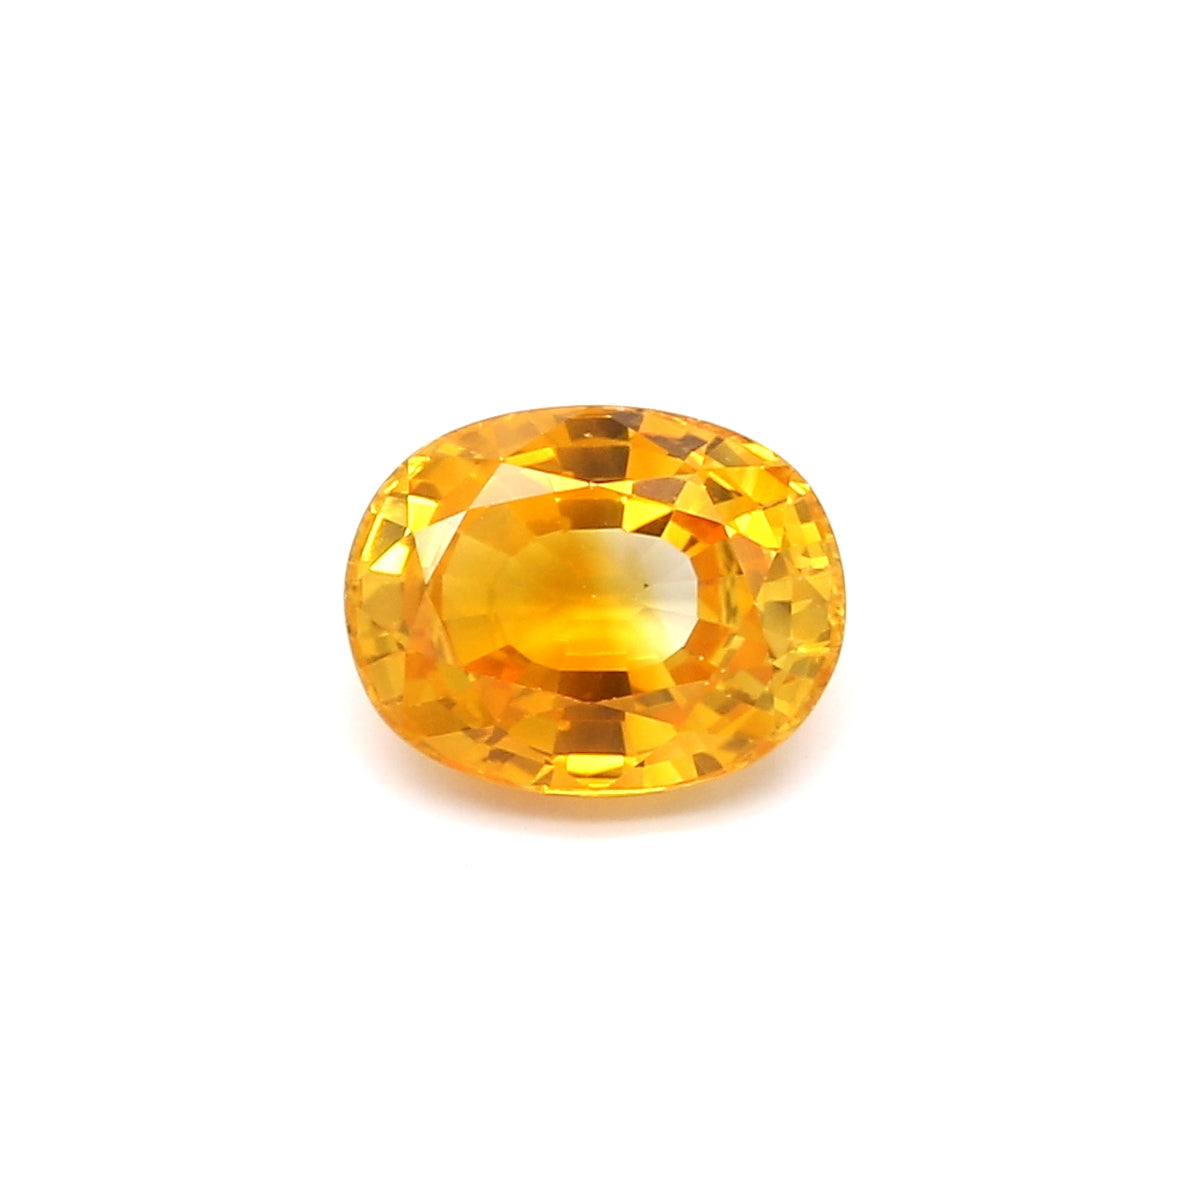 2.44ct Orangy Yellow, Oval Sapphire, Heated, Sri Lanka - 8.82 x 6.86 x 4.37mm